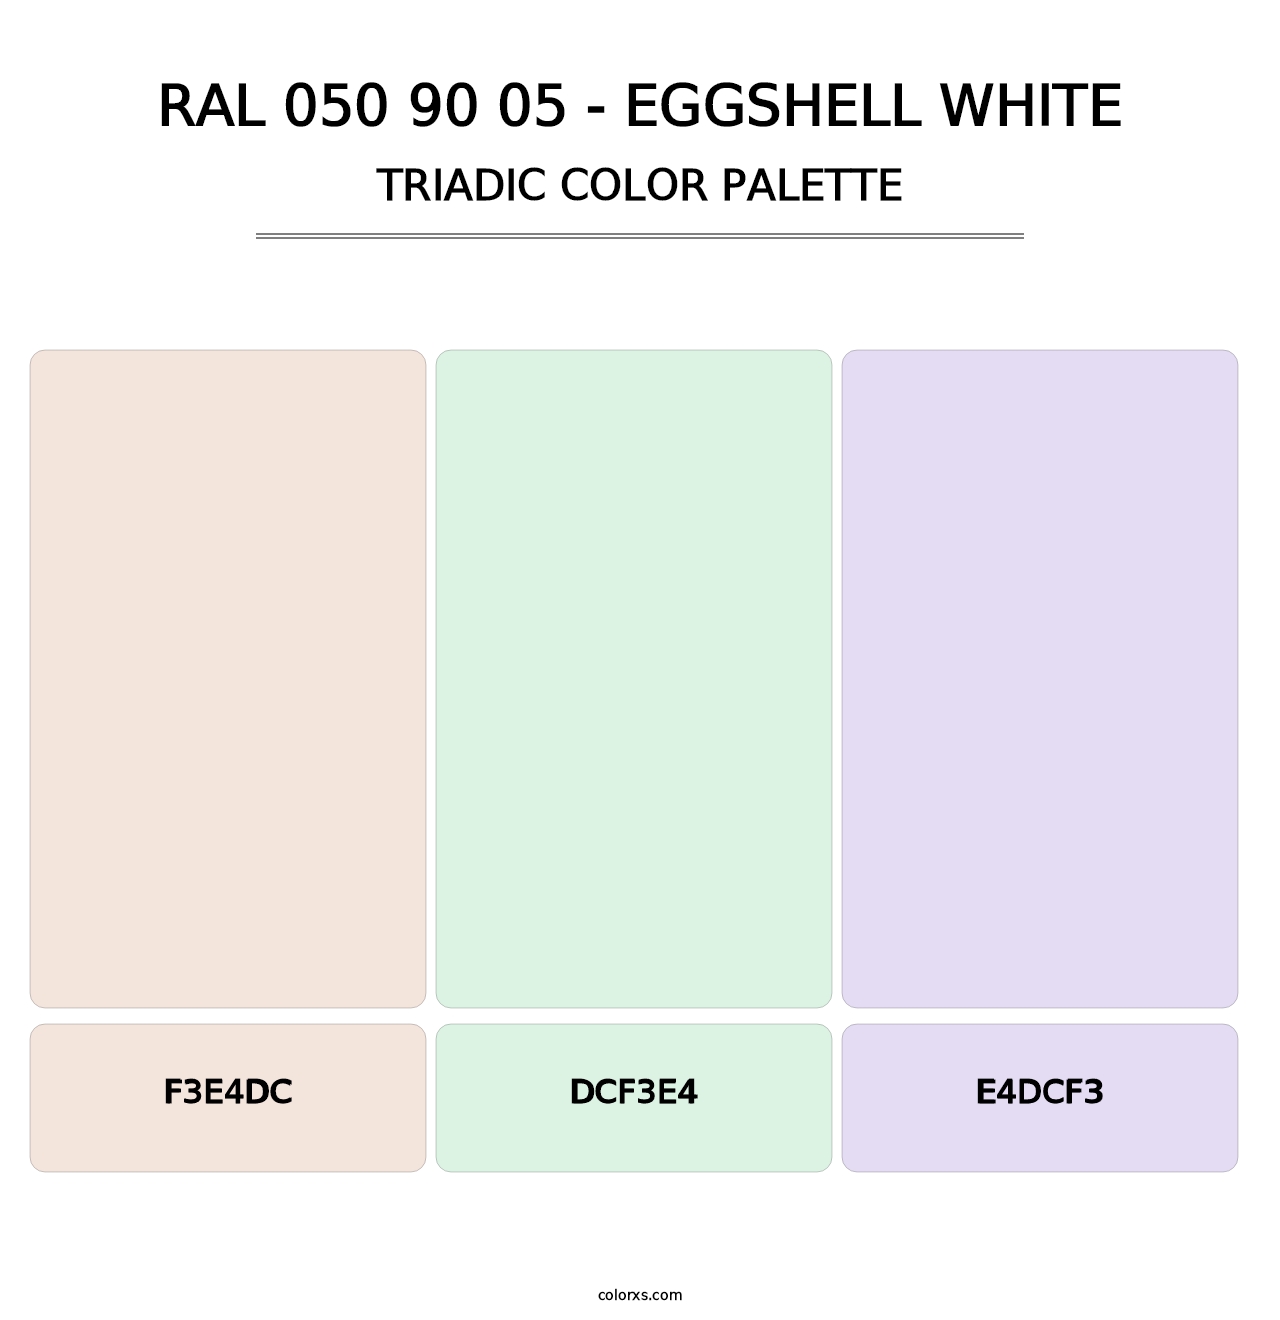 RAL 050 90 05 - Eggshell White - Triadic Color Palette